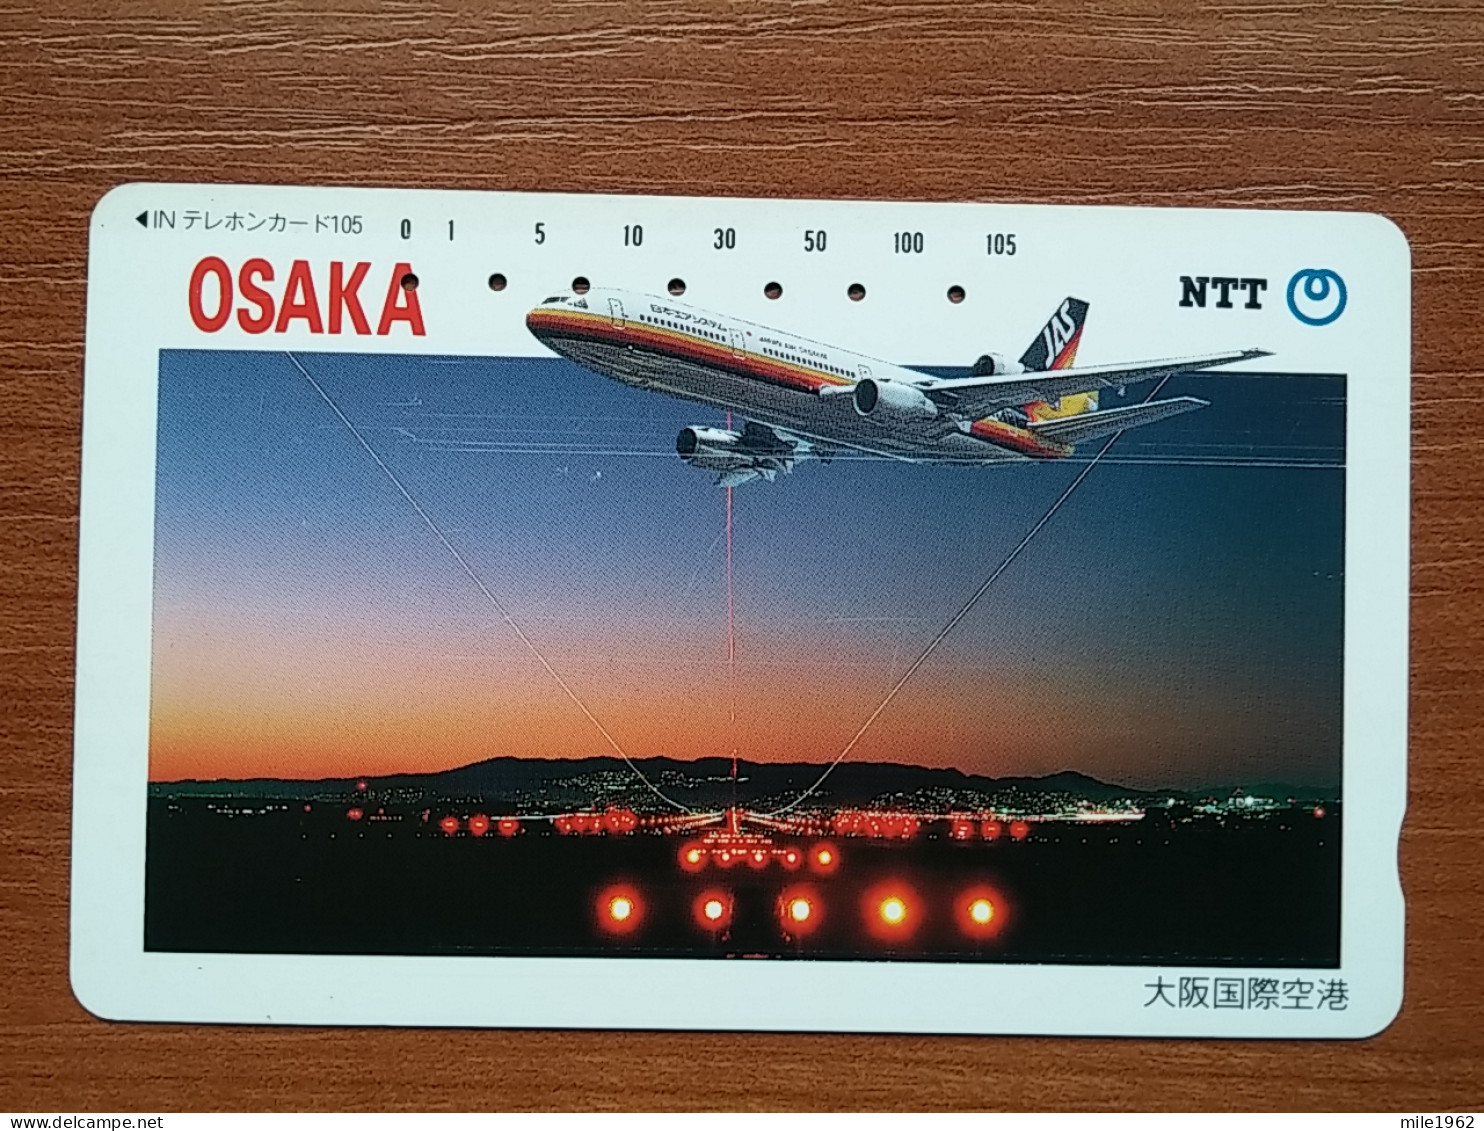 T-344 - JAPAN, TELECARD, PHONECARD,  Avion, Plane, Avio, NTT 331-061 - Aviones